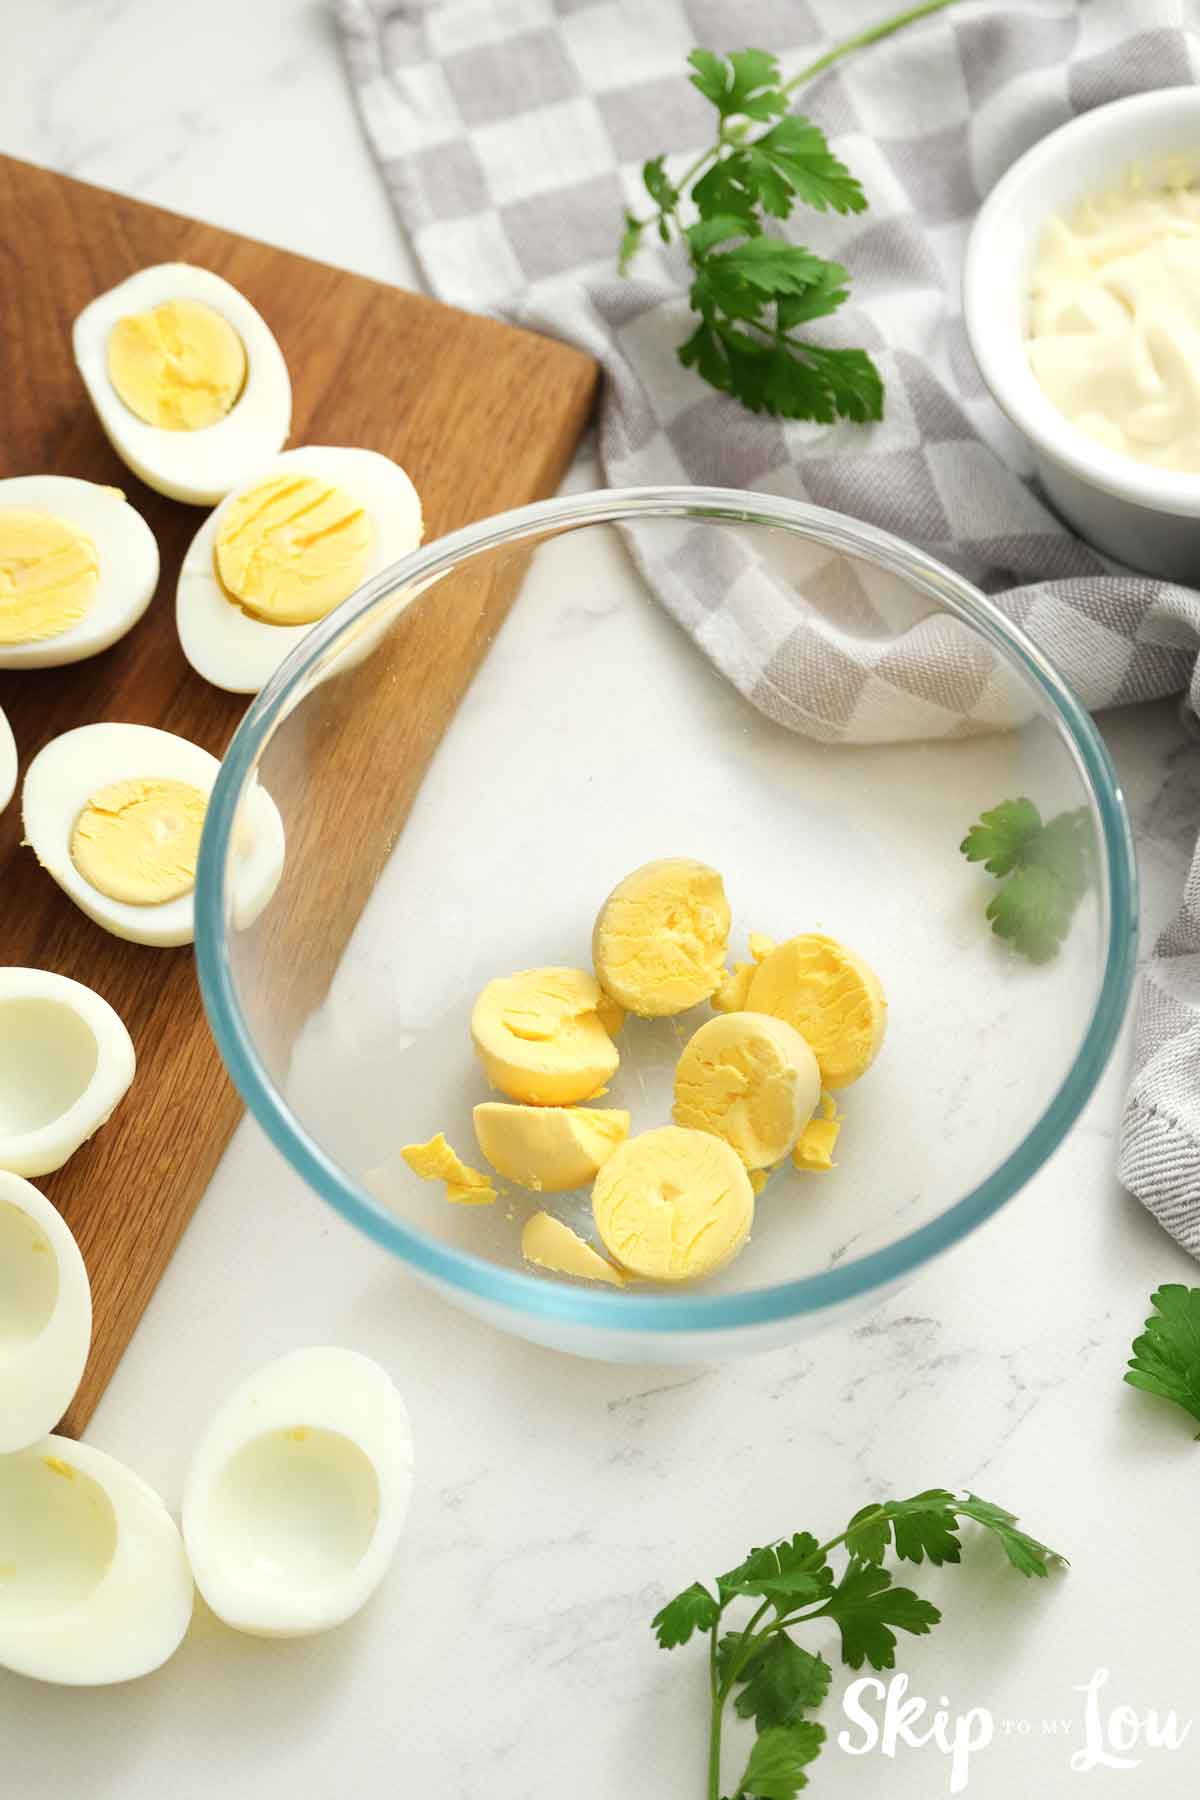 remove hard boiled egg yolks into a bowl